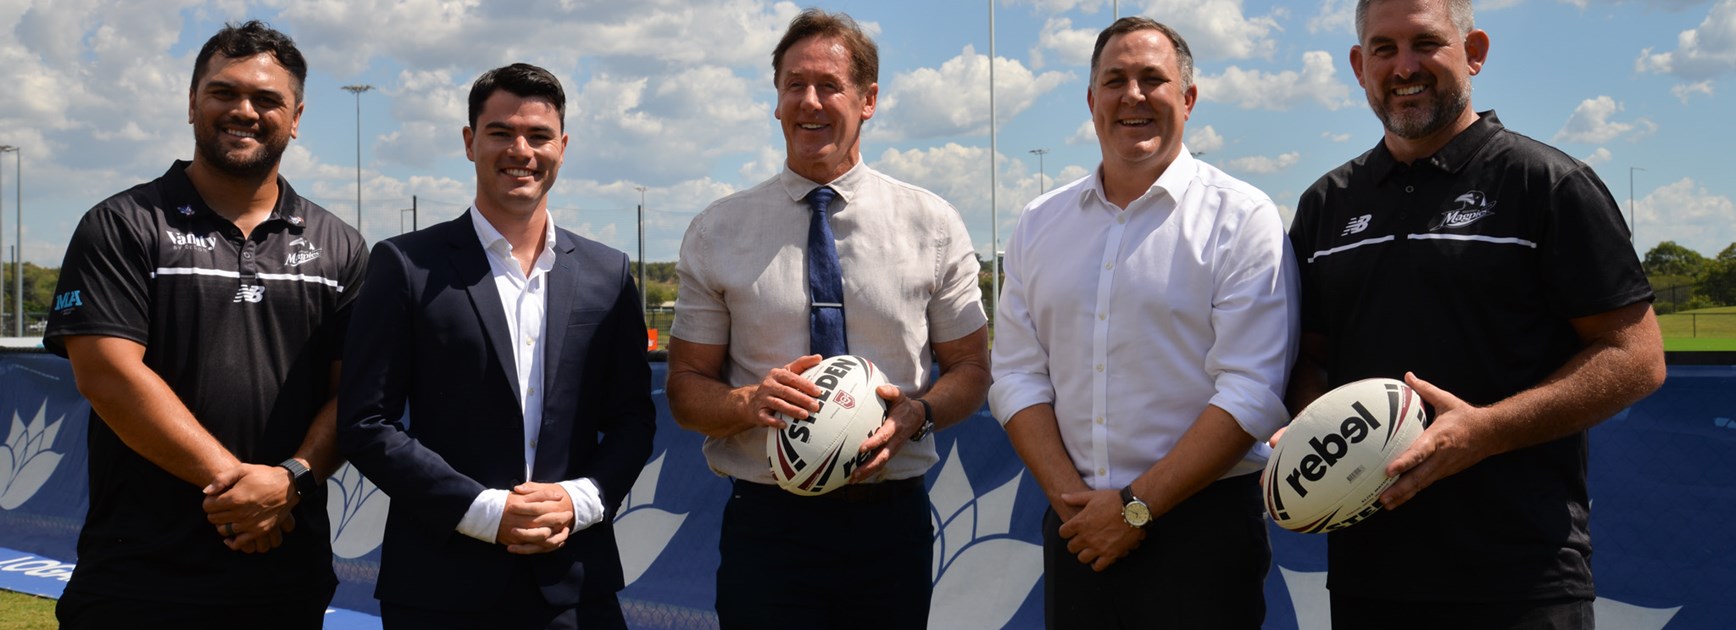 Logan Metro revival boosts rugby league heartland